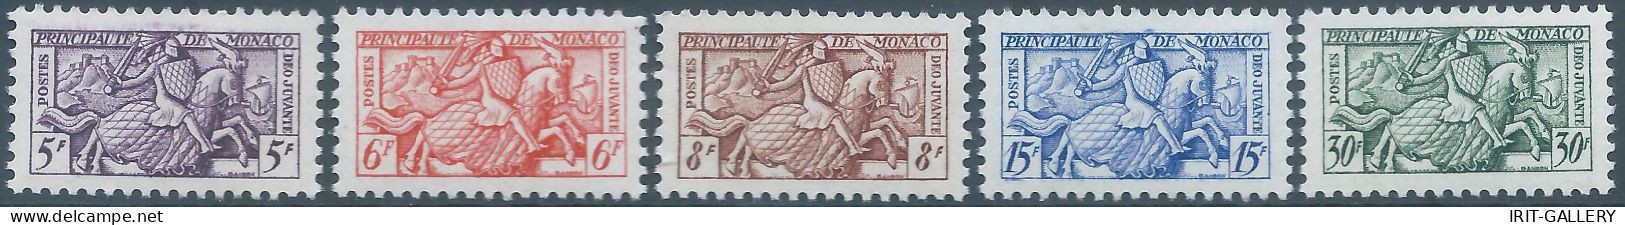 MONACO - MONK - MONTECARLO,1955 Stamps For Business Cards,5Fr-6Fr-8Fr-15Fr-30Fr,MNH - Neufs